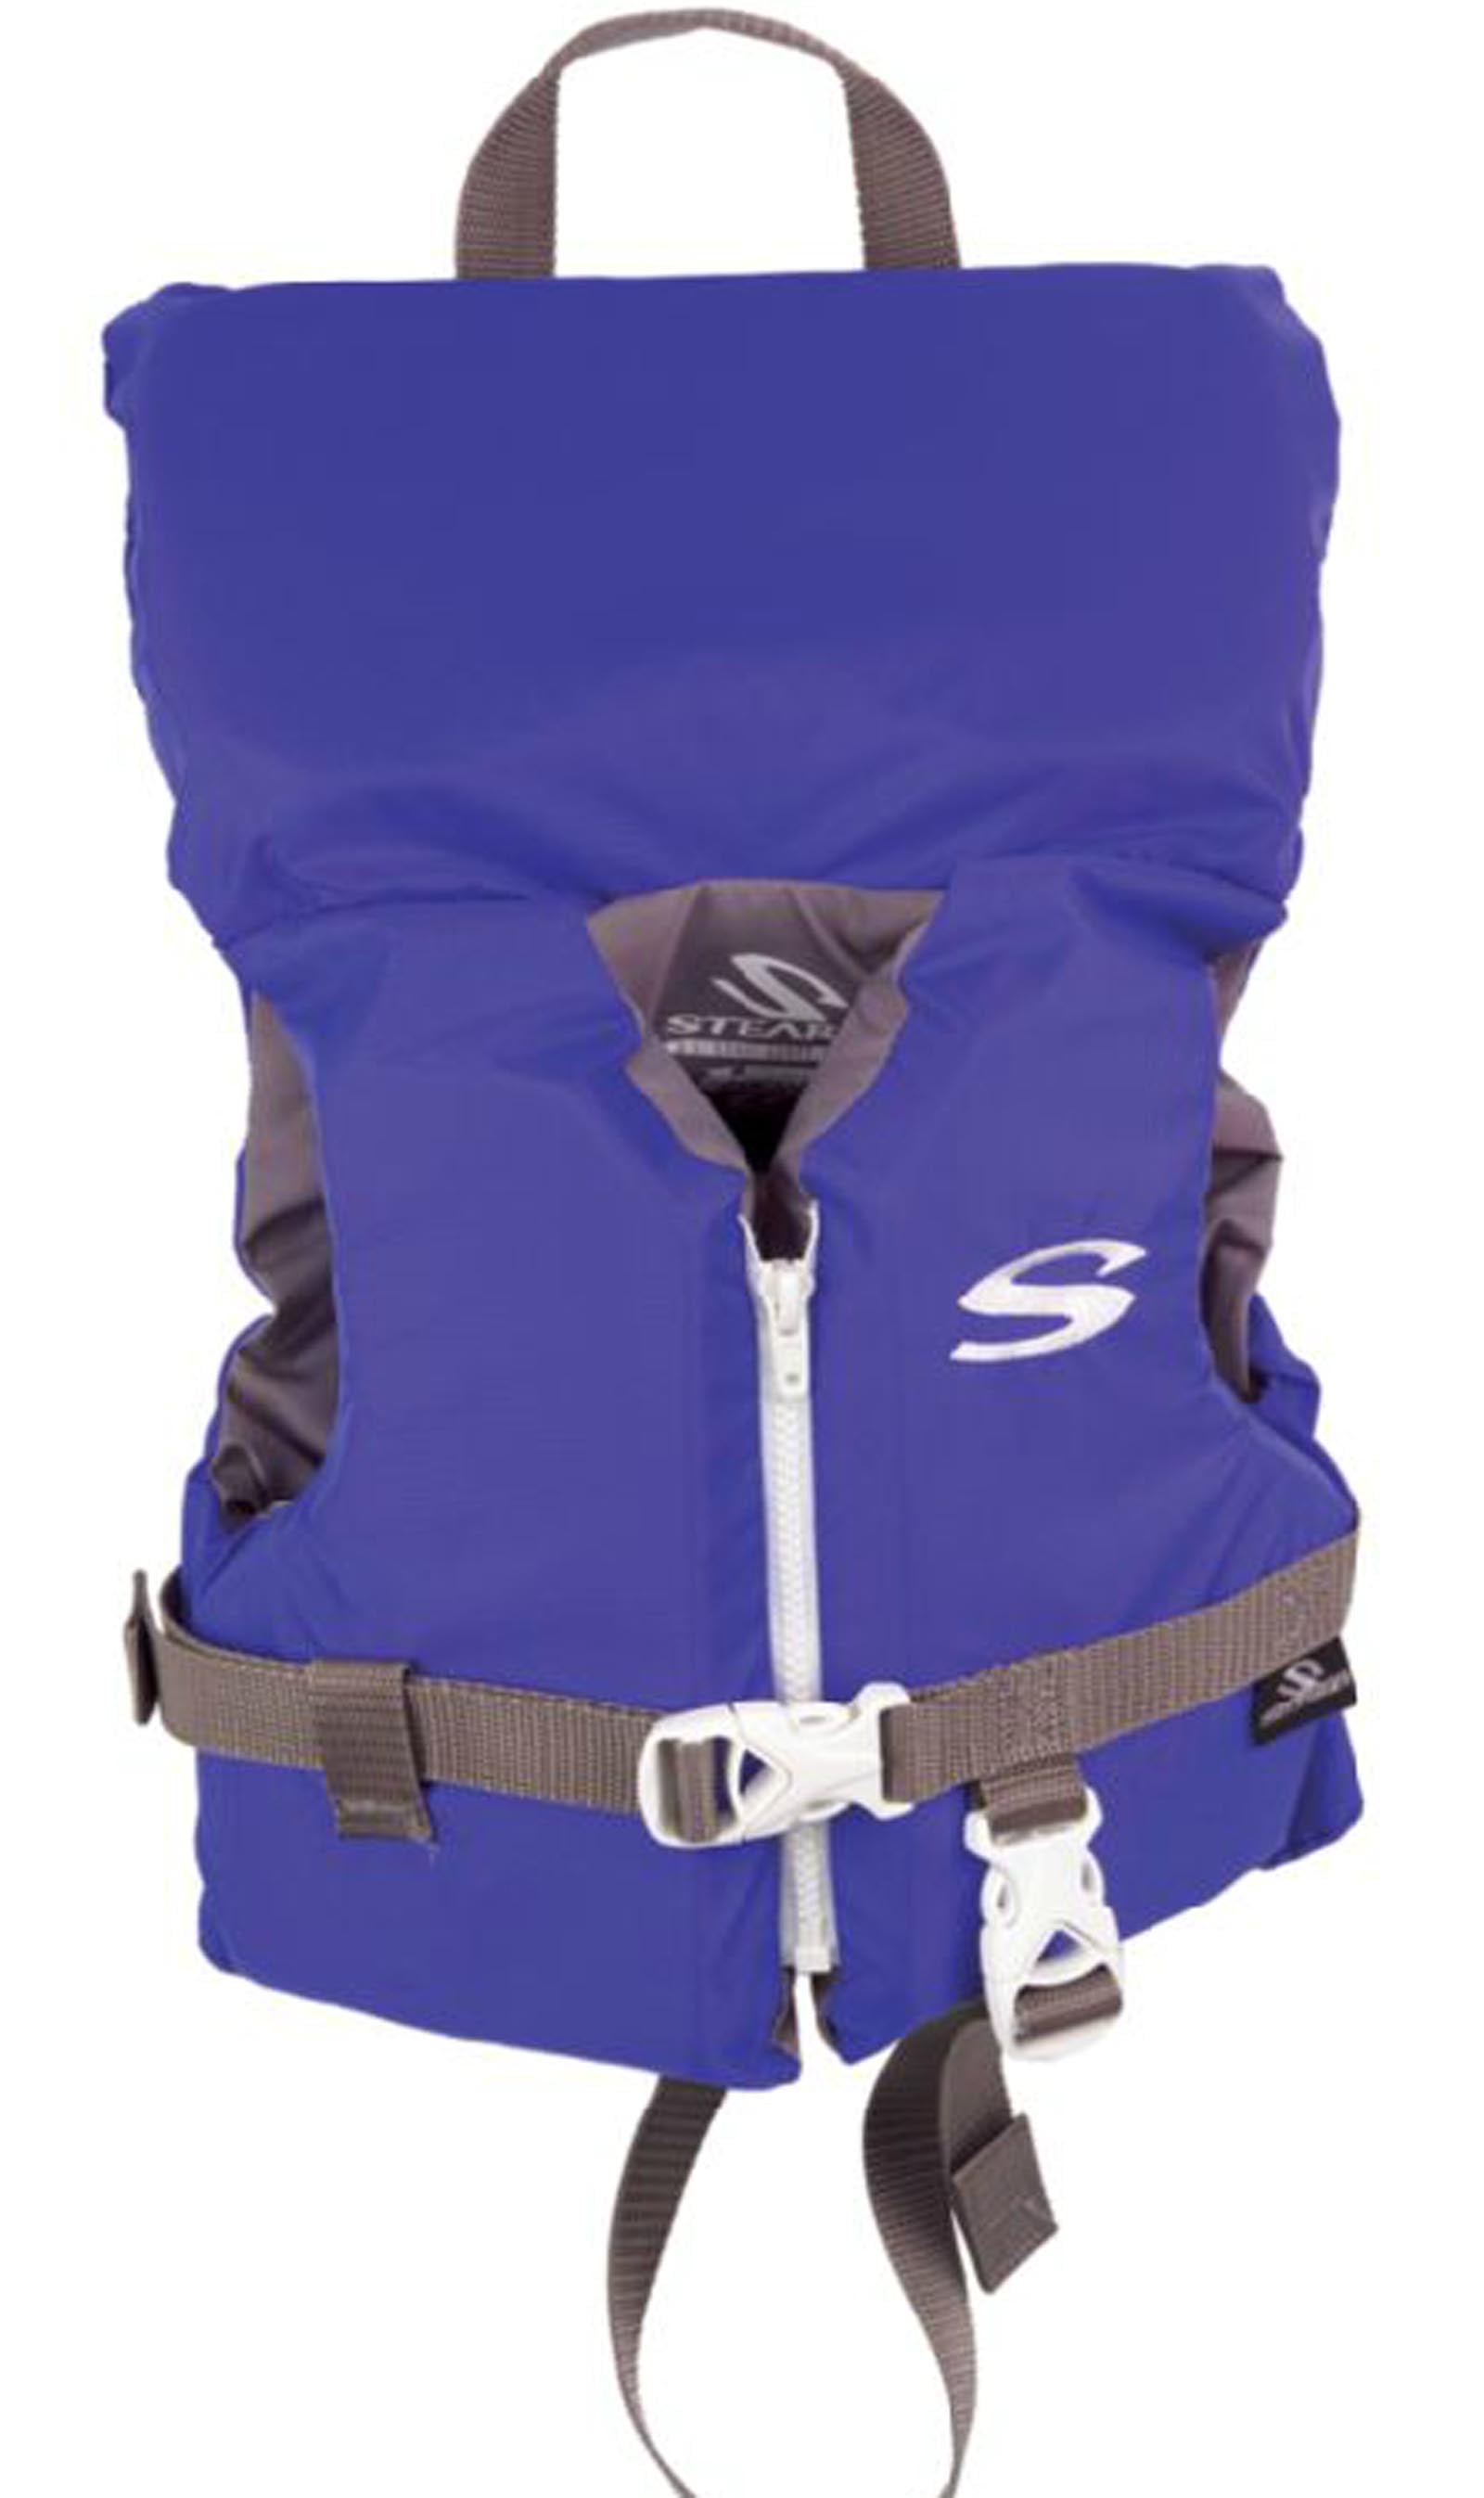 ~ NEW Spiderman Spider-Sense Child Life Jacket Ski Vest from Stearns 30-45 lbs 